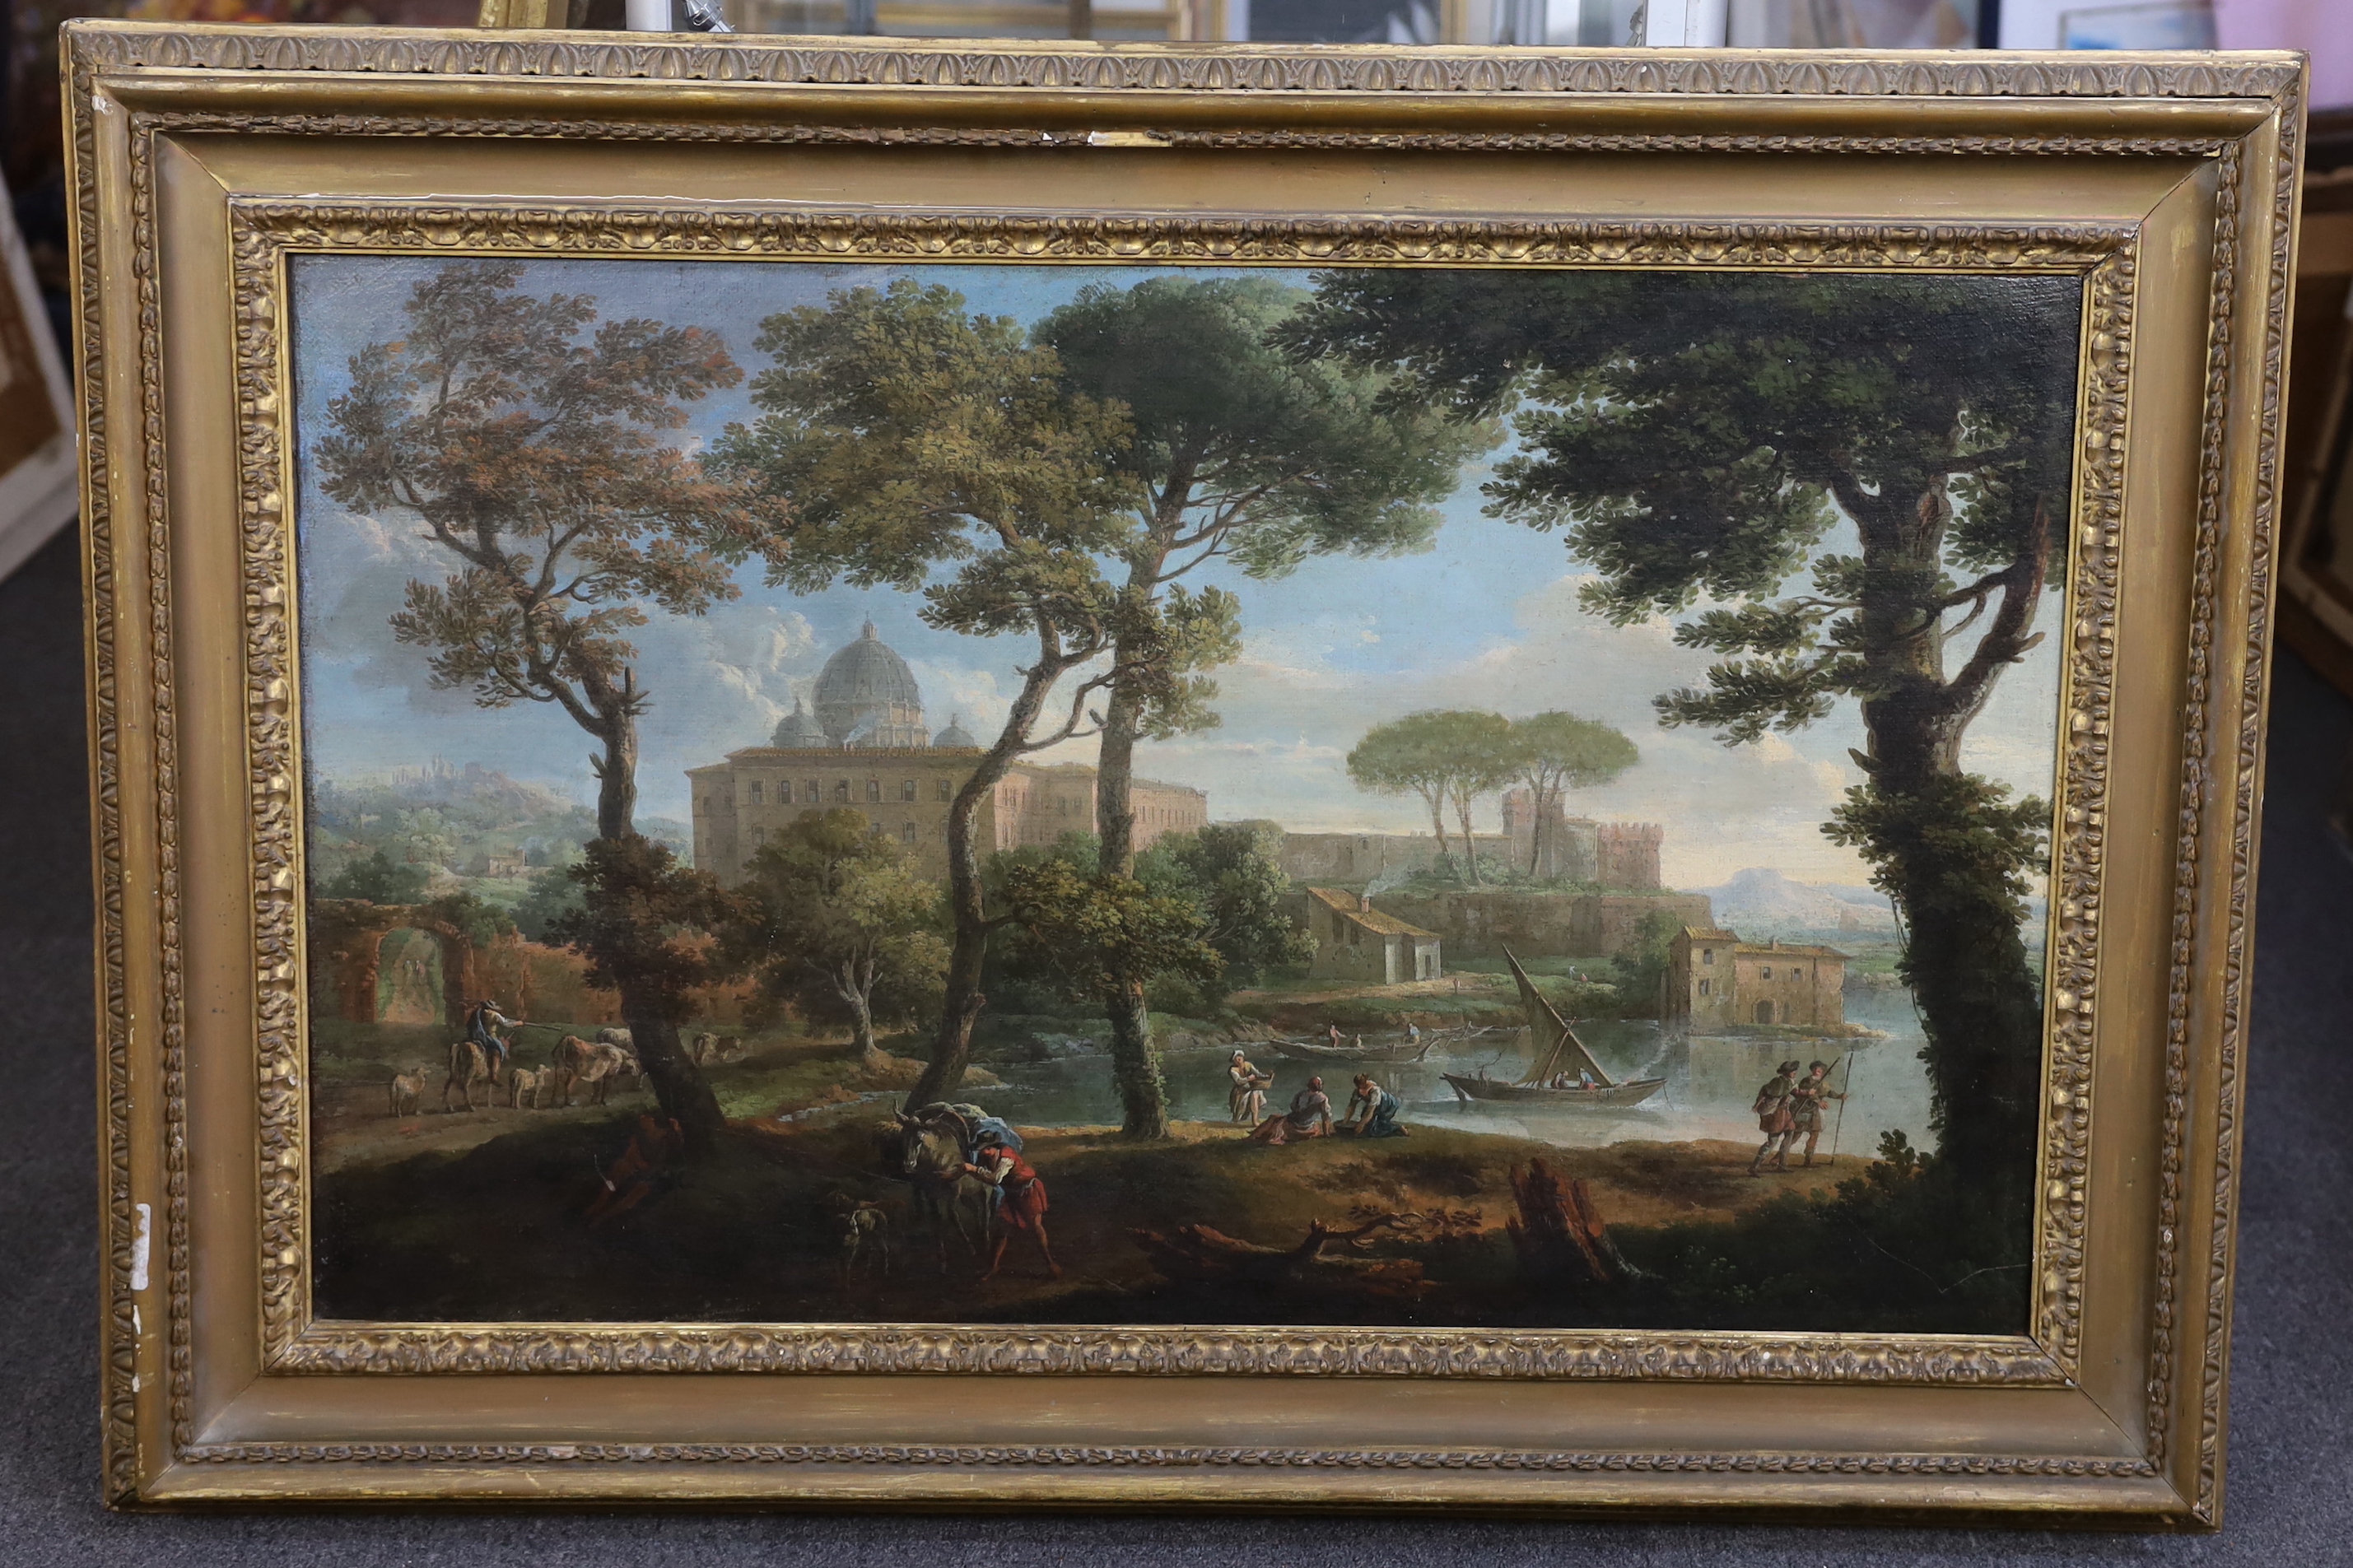 Manner of Claude Lorrain (1600-1682), A river landscape near Rome, oil on canvas, 60 x 97cm